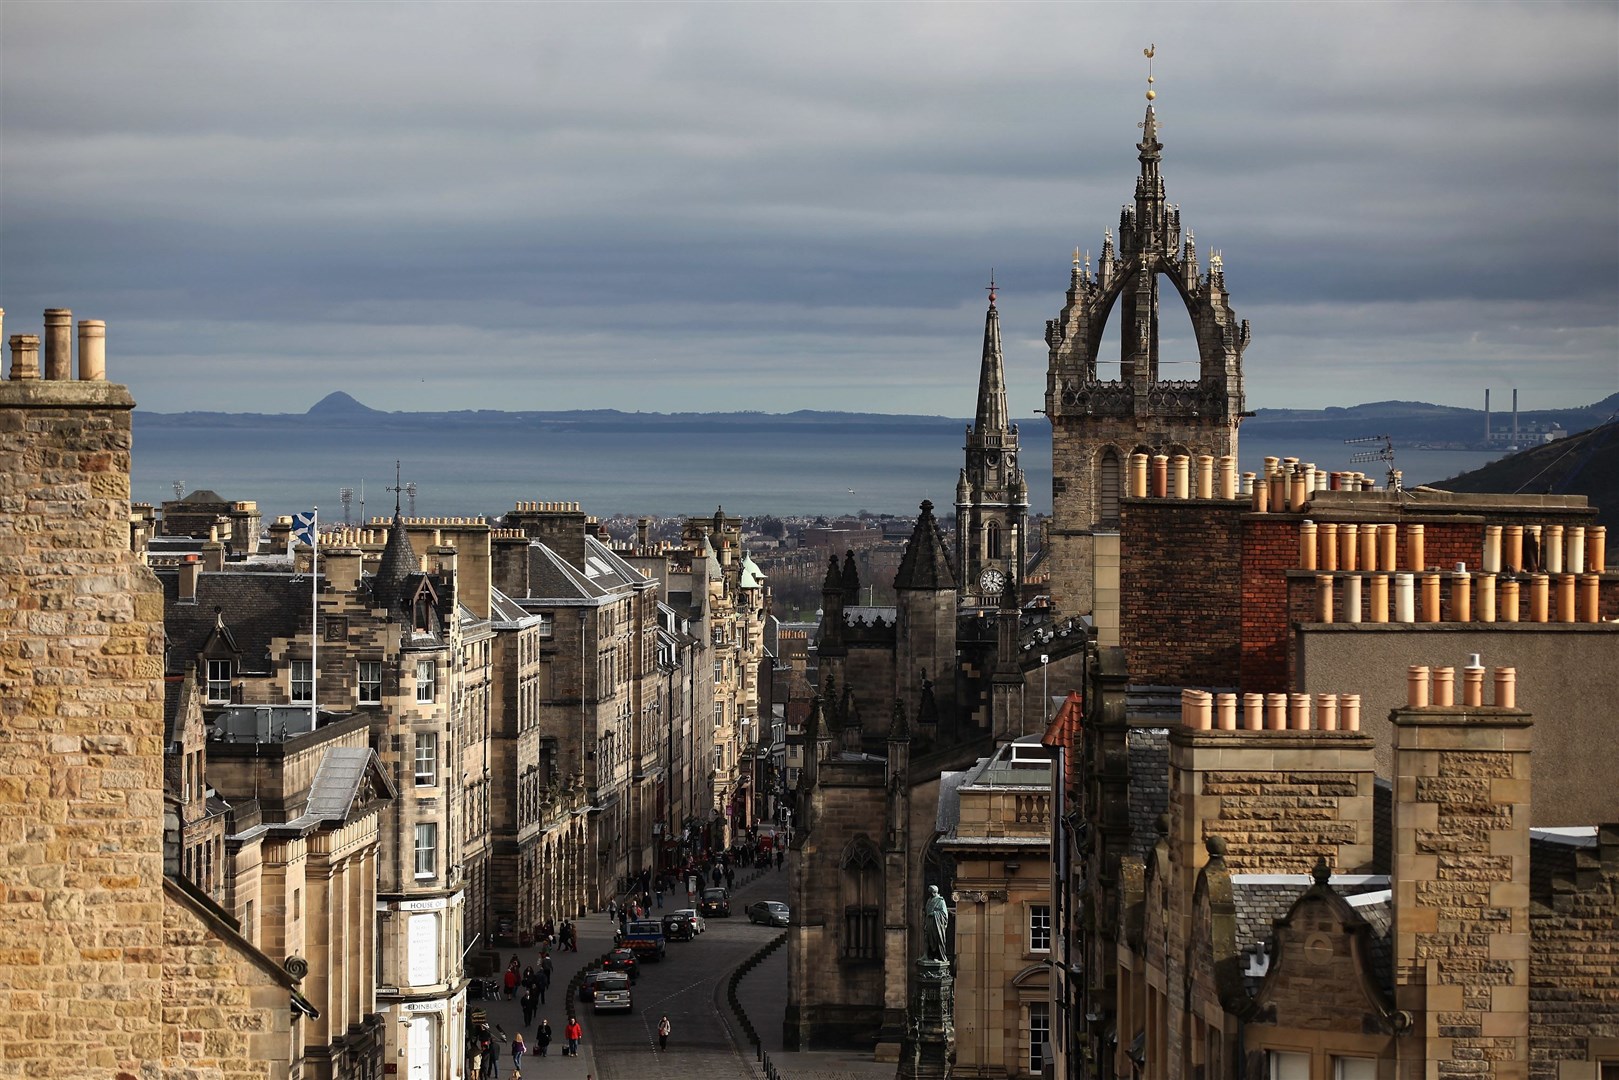 Edinburgh is home for many of Scotland's non-British citizens.